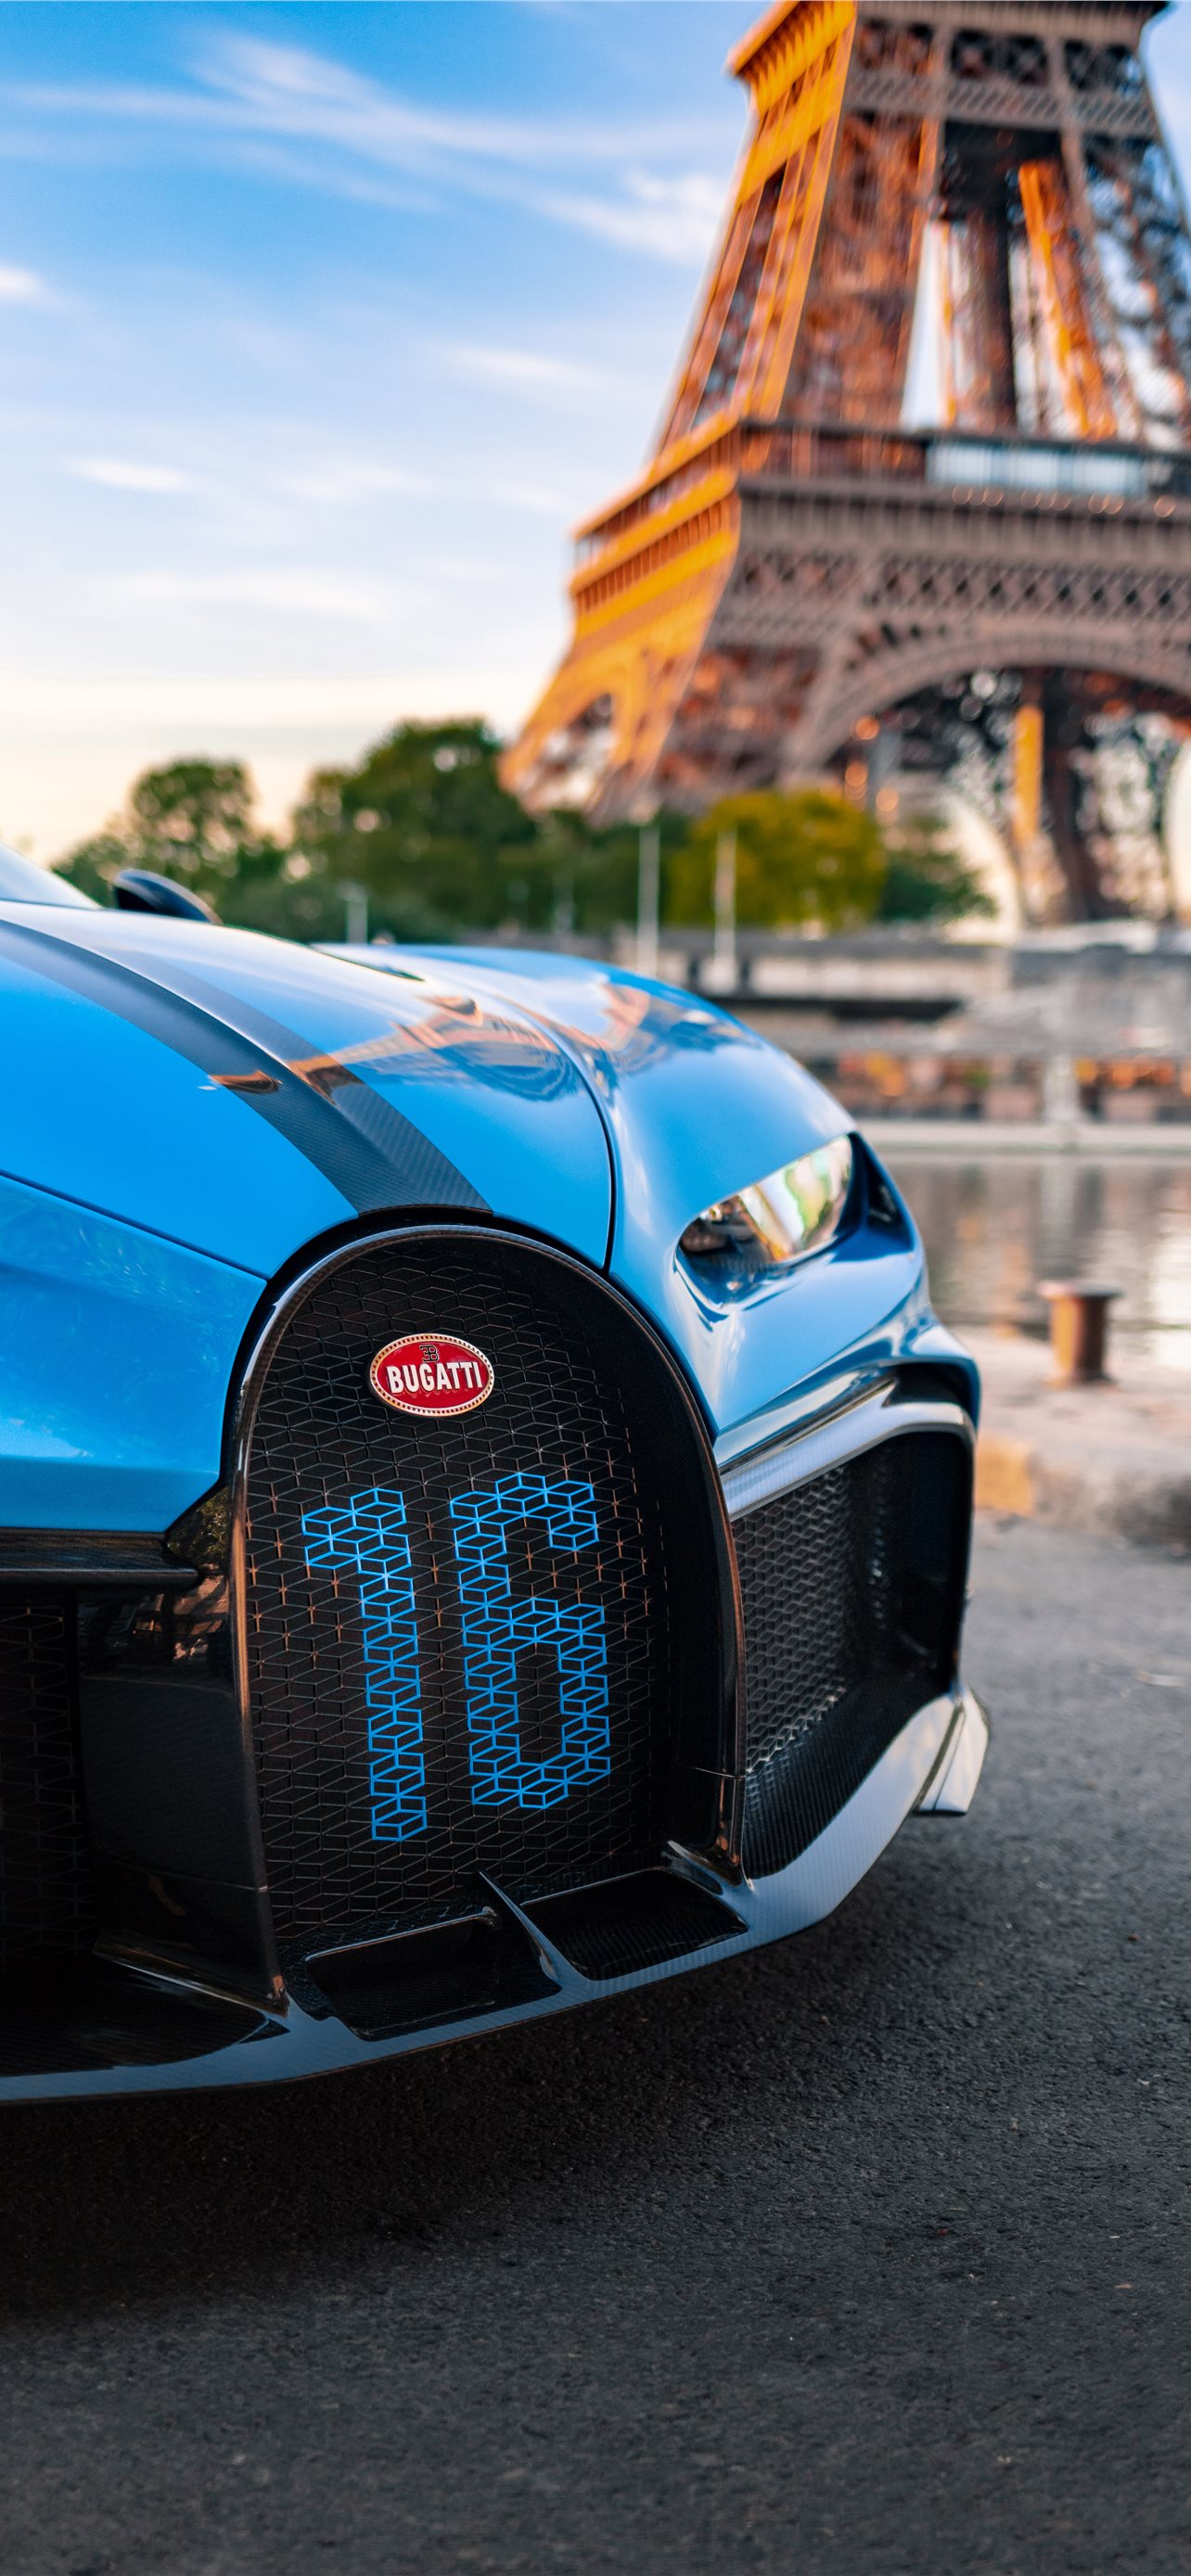 Bugatti Veyron 9 Wallpapers | HD Wallpapers | ID #6726